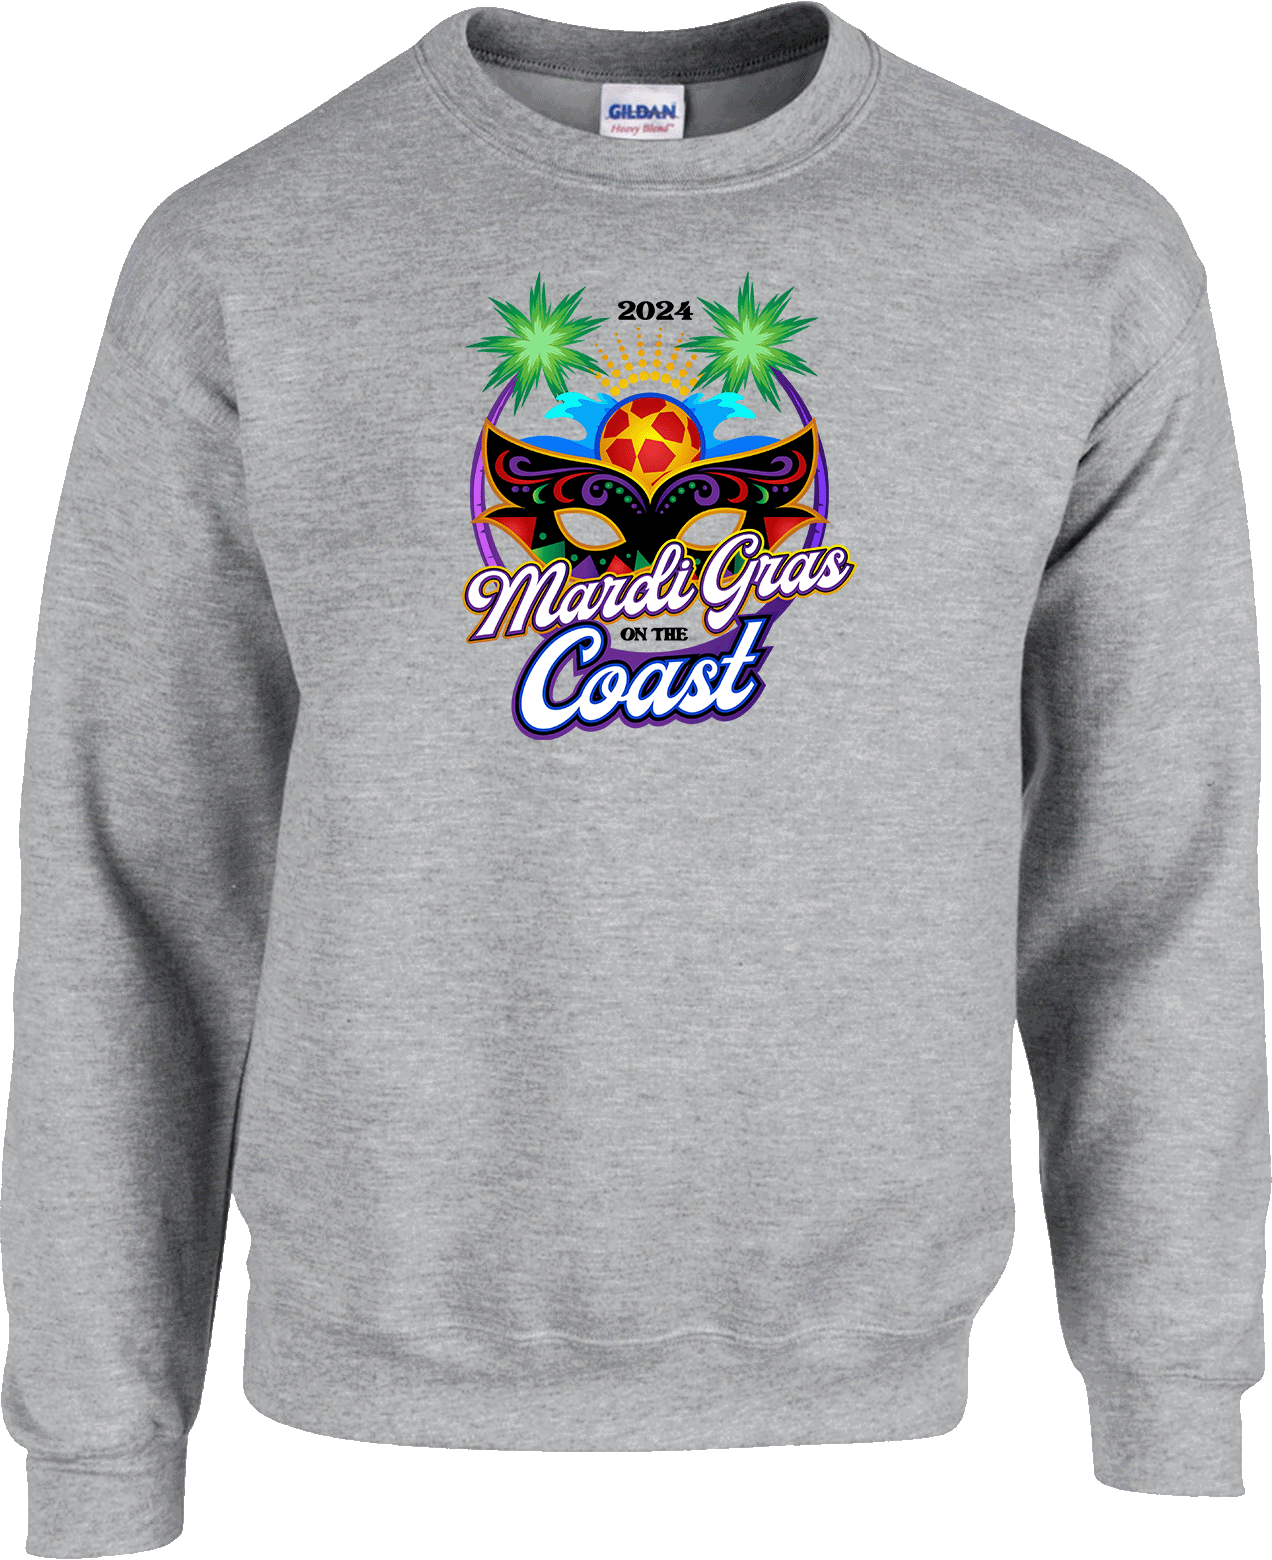 Crew Sweatershirt - 2024 Mardi Gras On The Coast